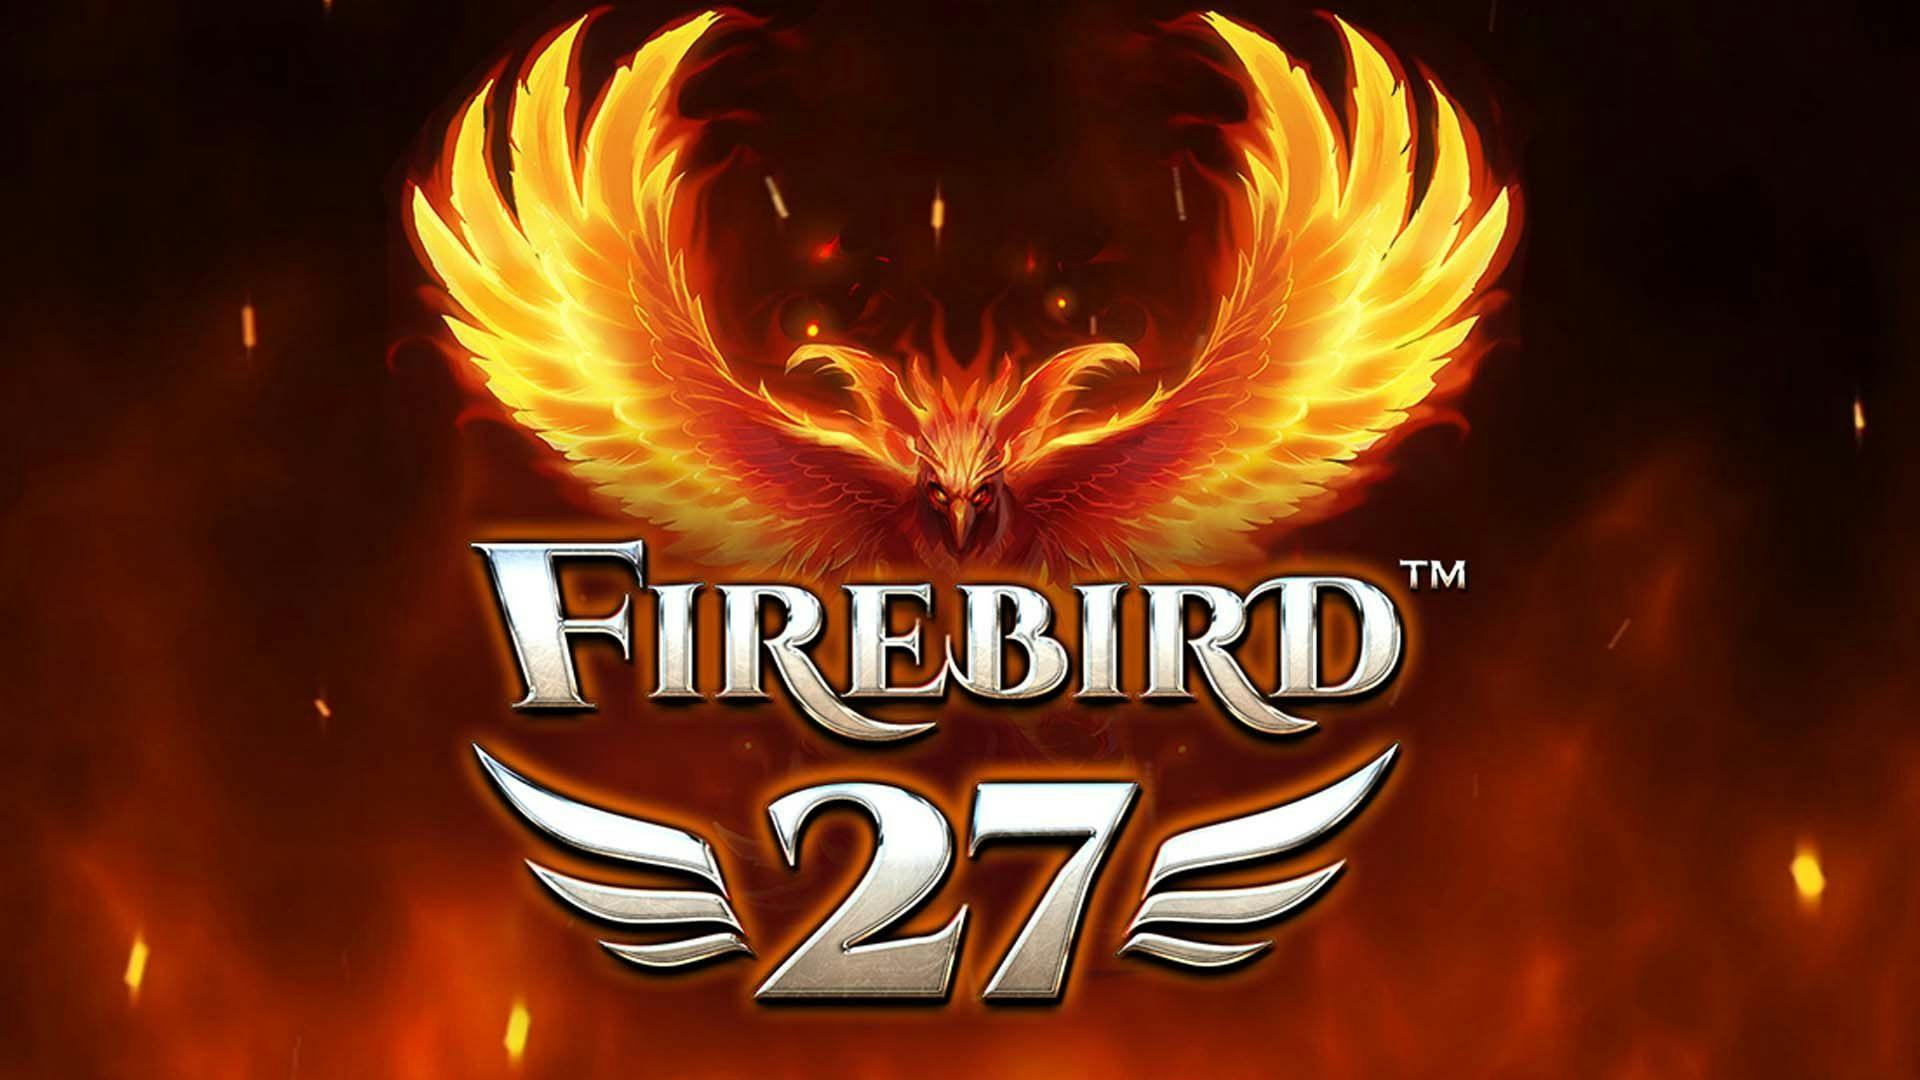 Firebird 27 Slot Machine Online Free Game Play